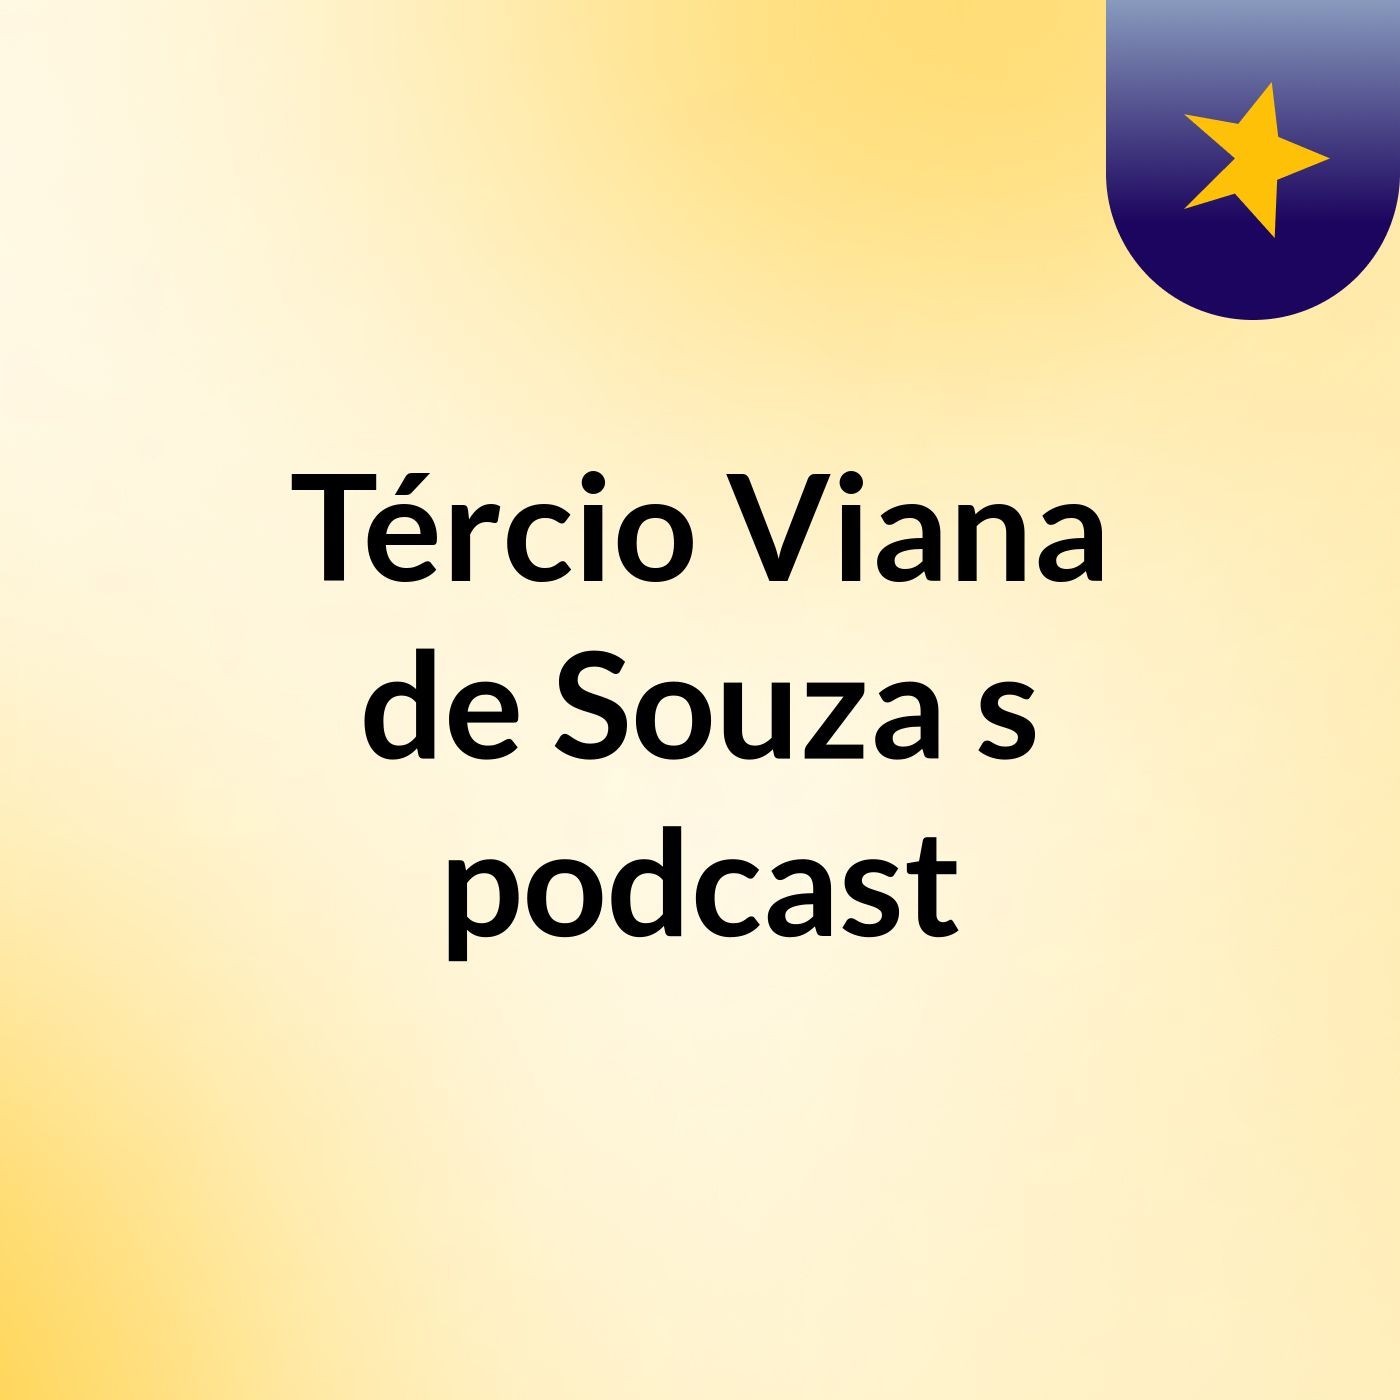 Tércio Viana de Souza's podcast